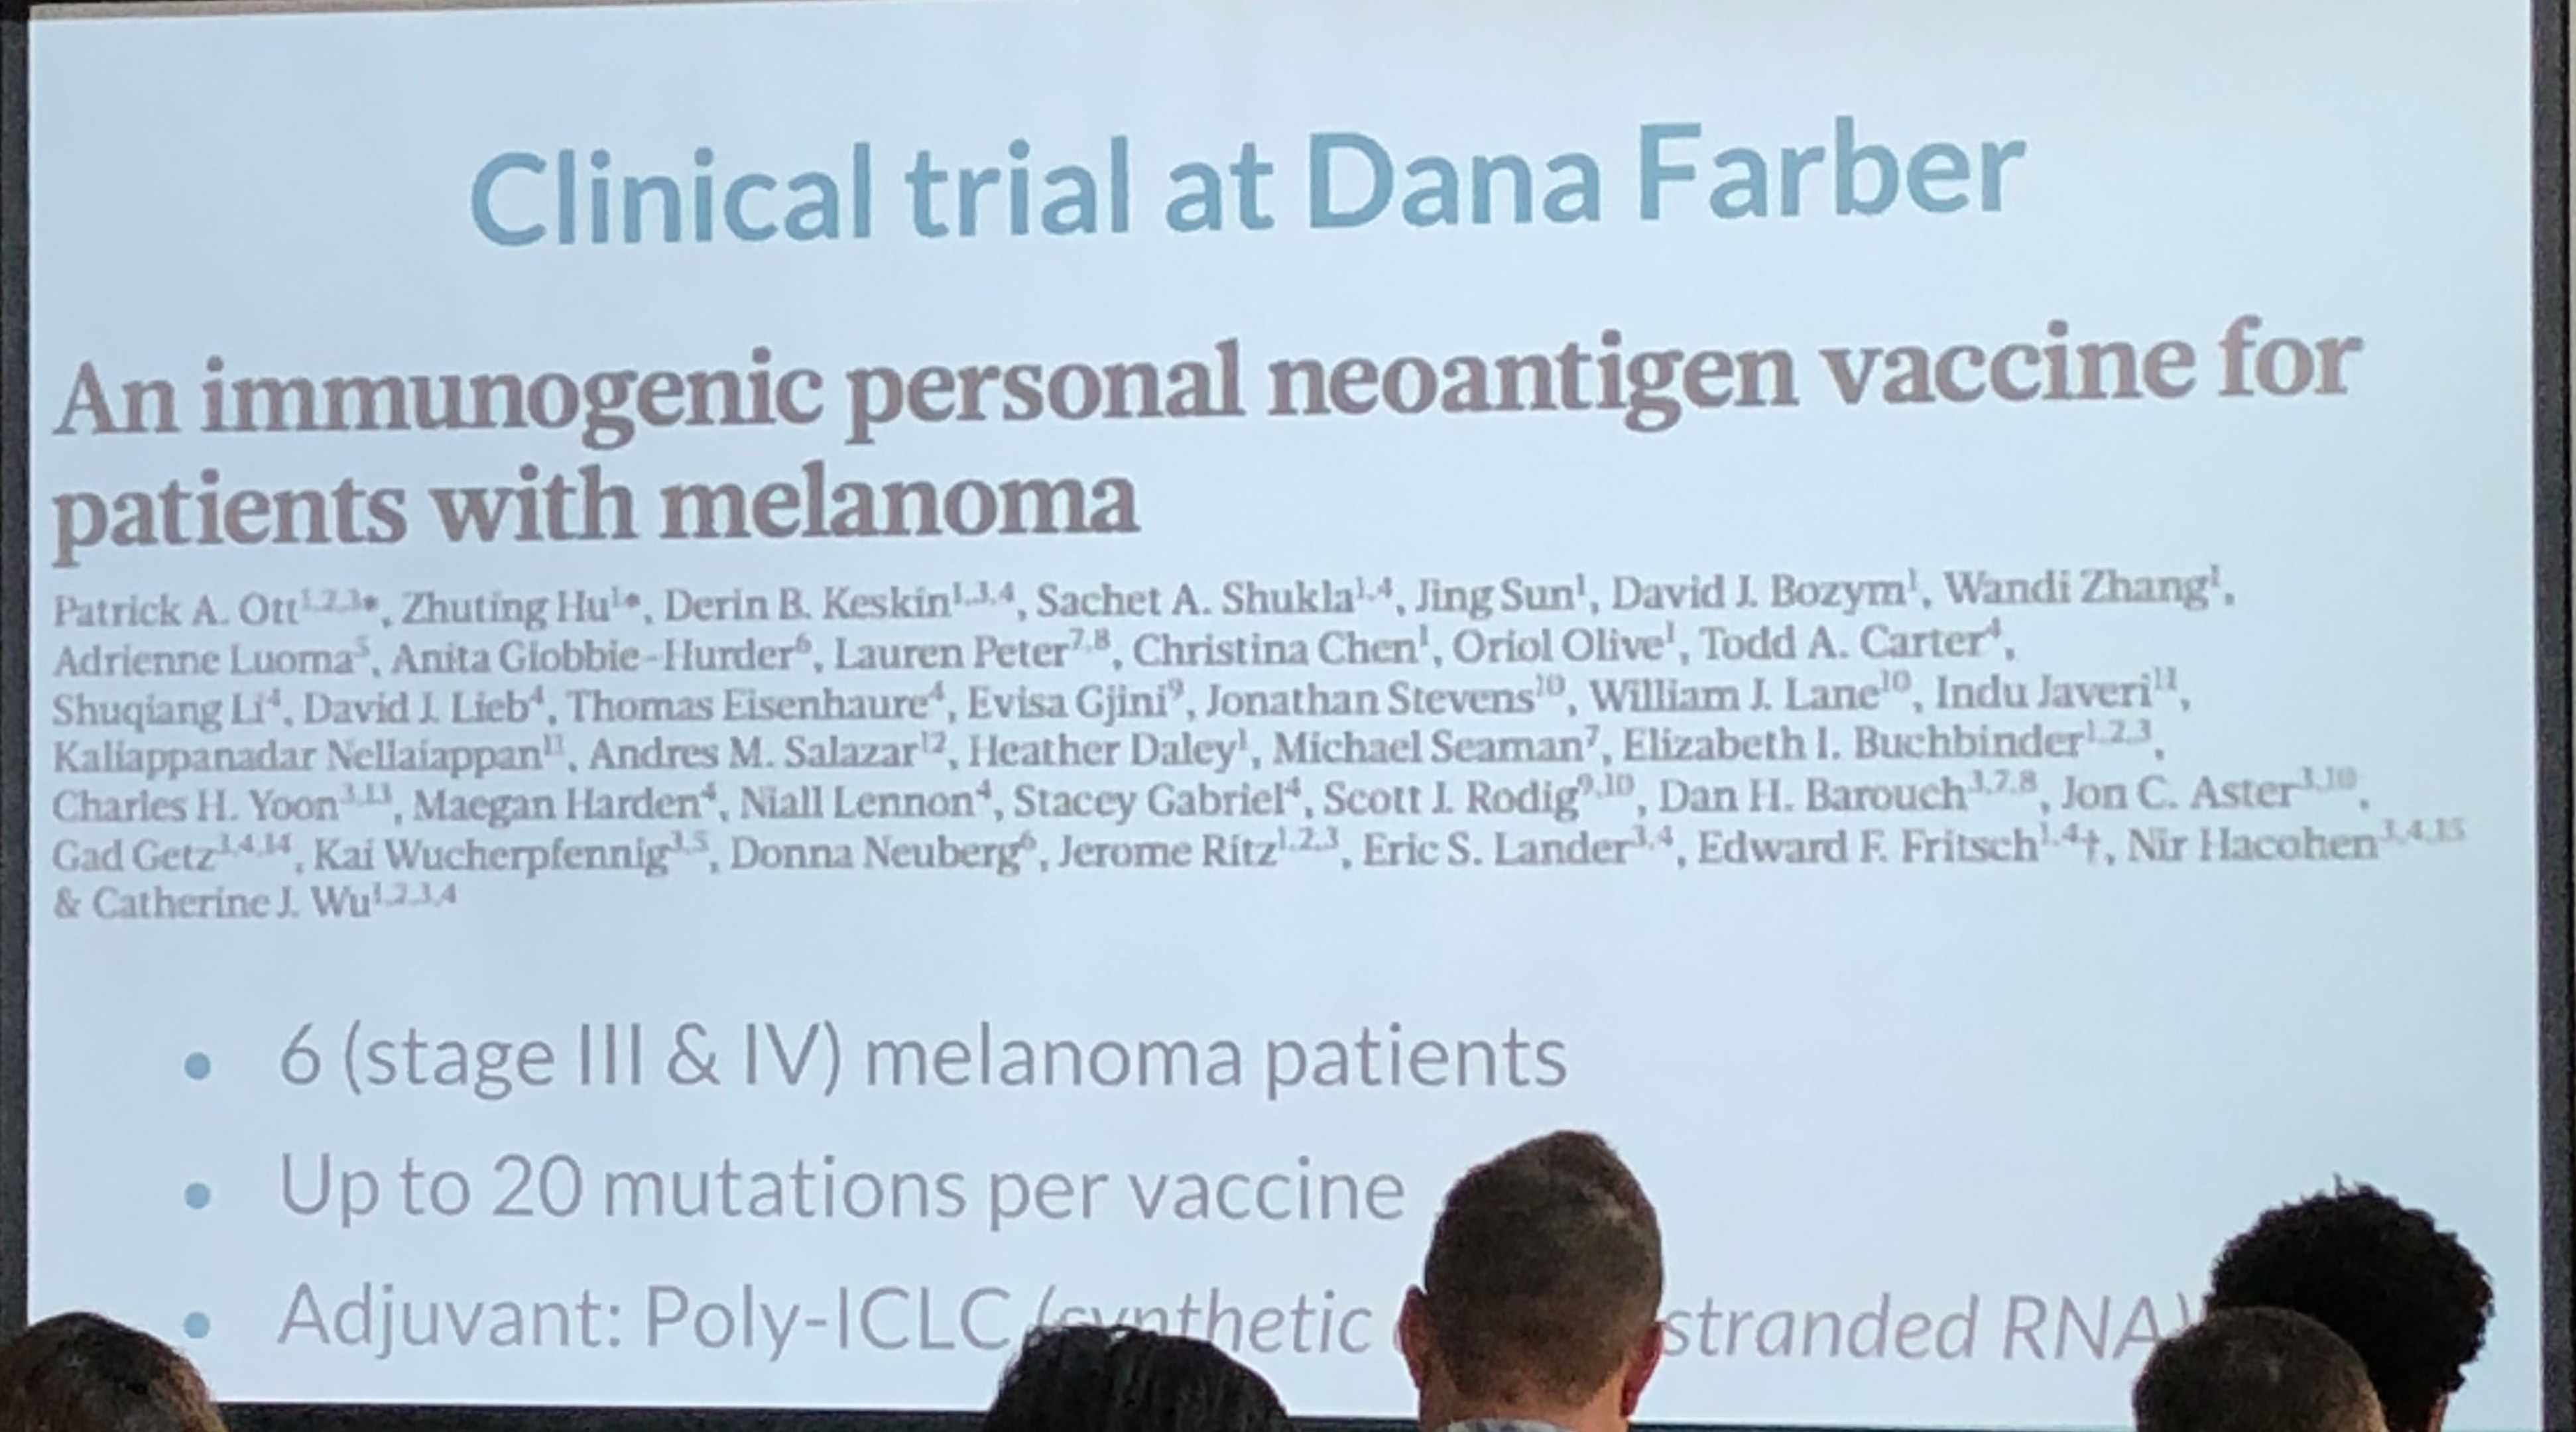 Cancer Vaccine for Melanoma from Dana Farber using neoantigens